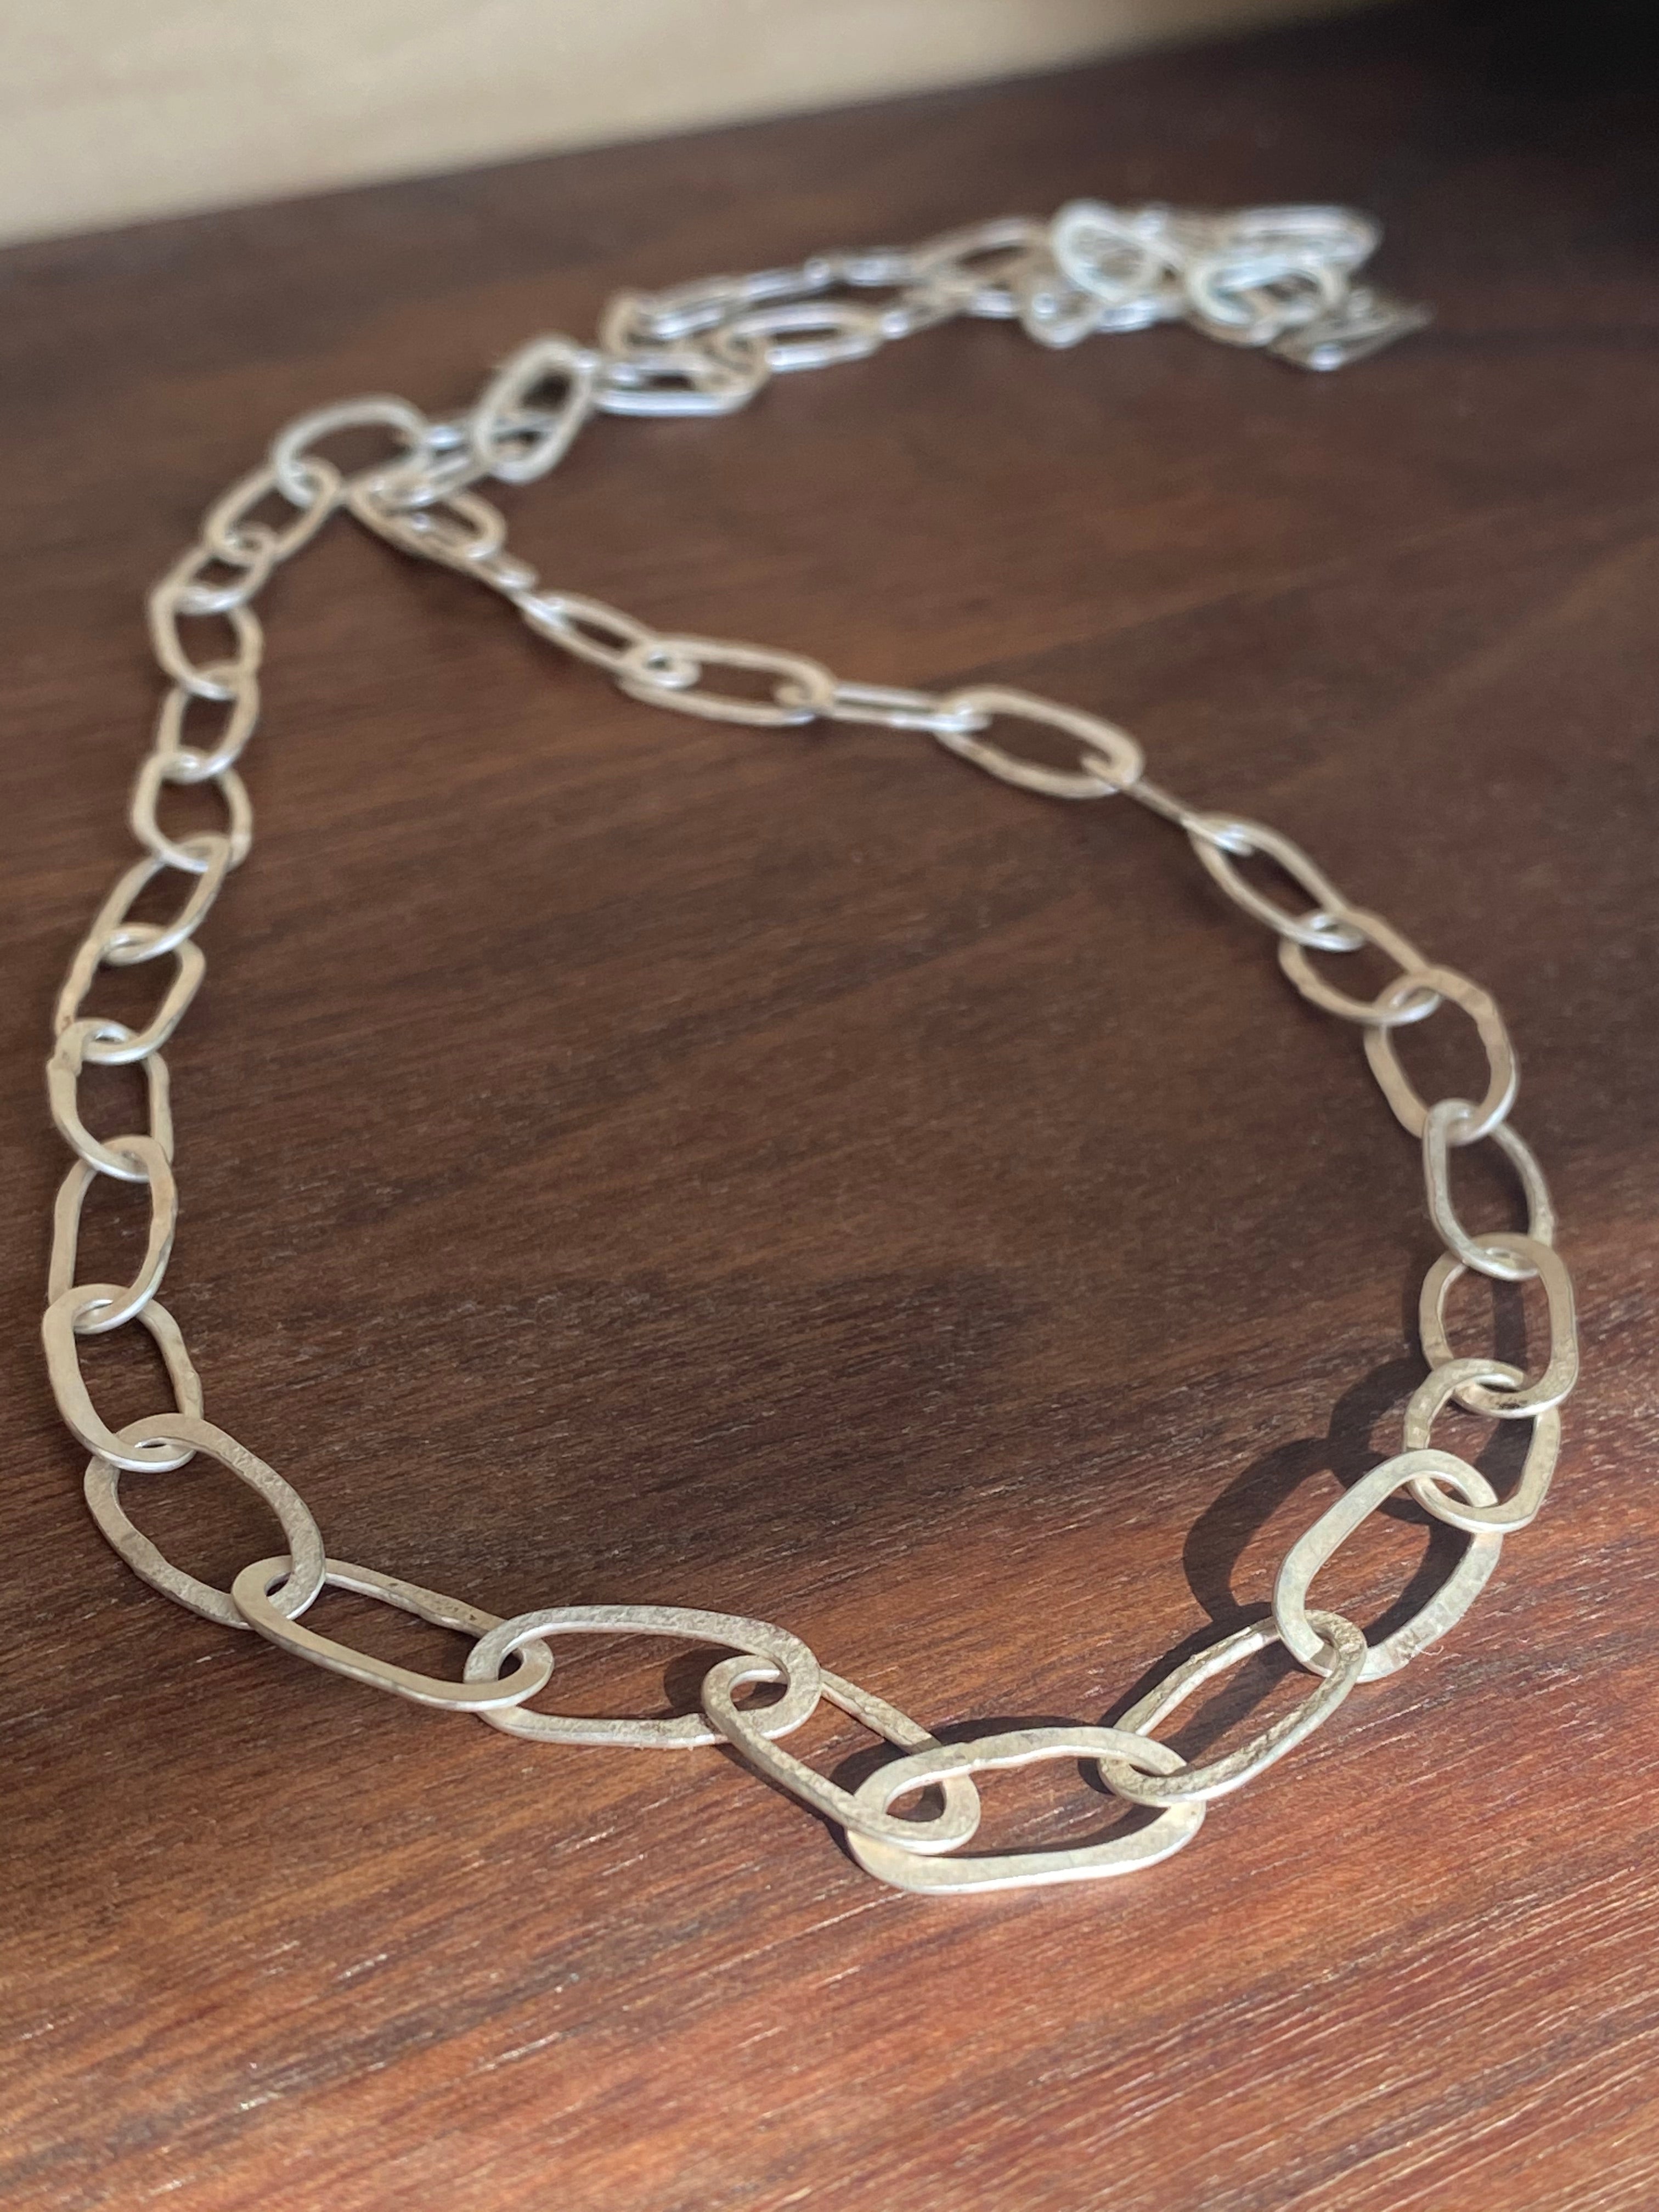 Siedra Loeffler- Oval Link Chain Necklace